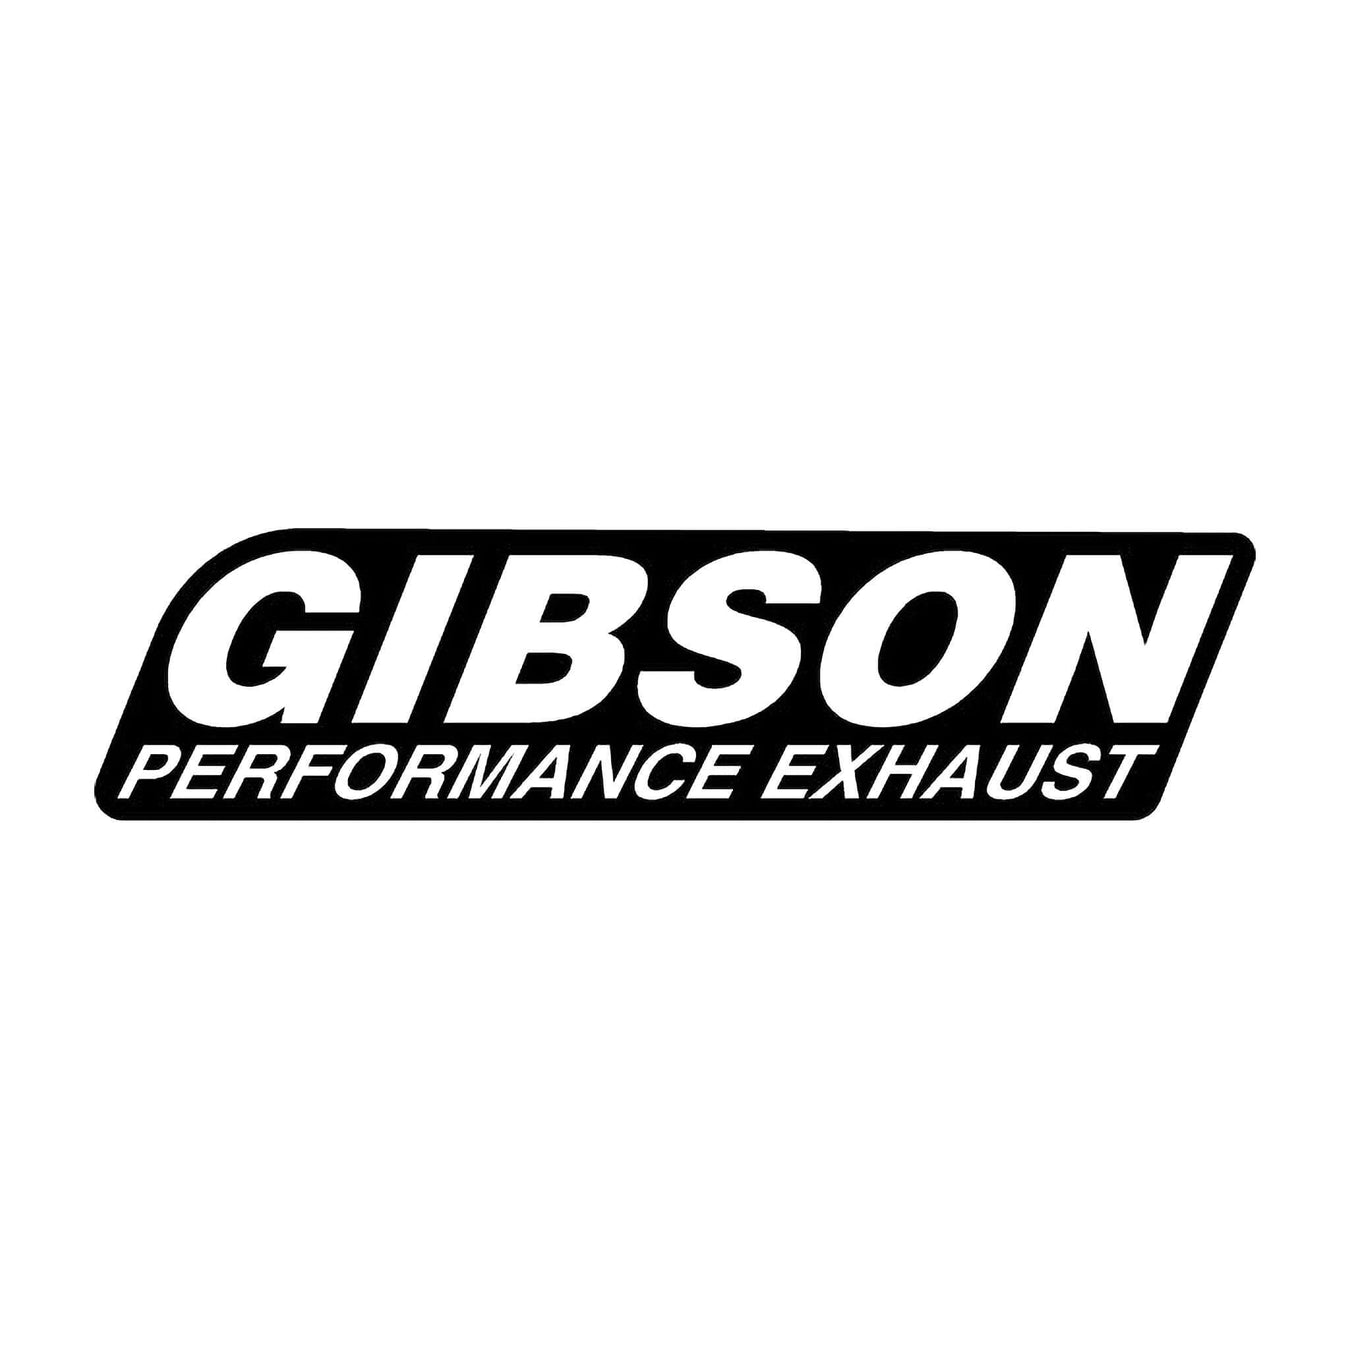 GIBSON PERFORMANCE